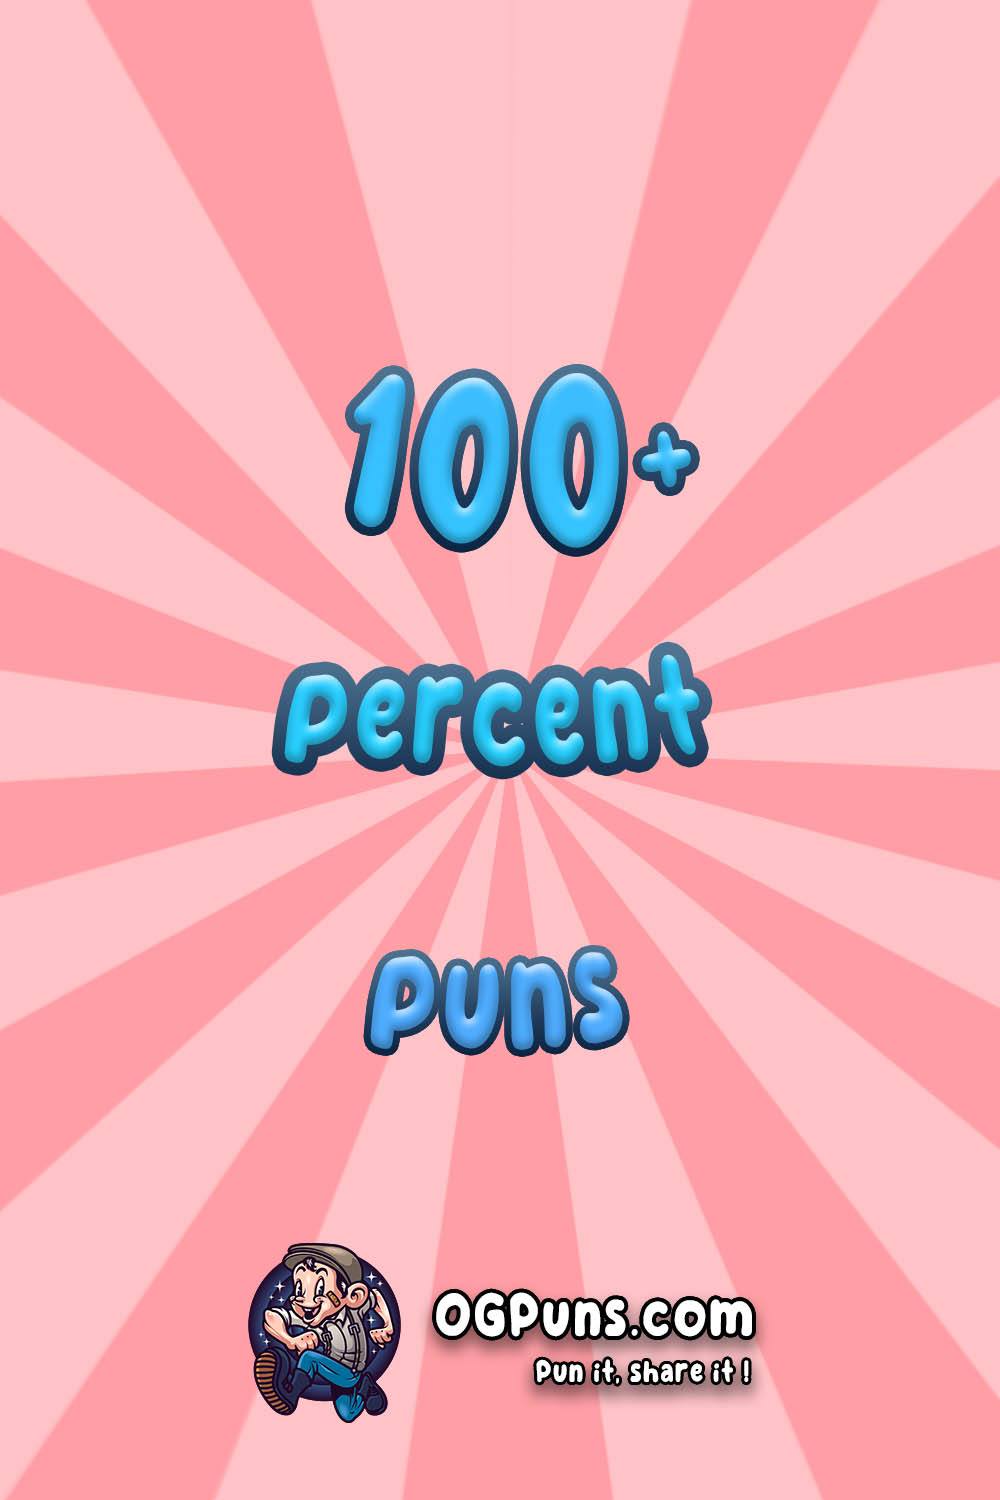 Percent puns Image for Pinterest